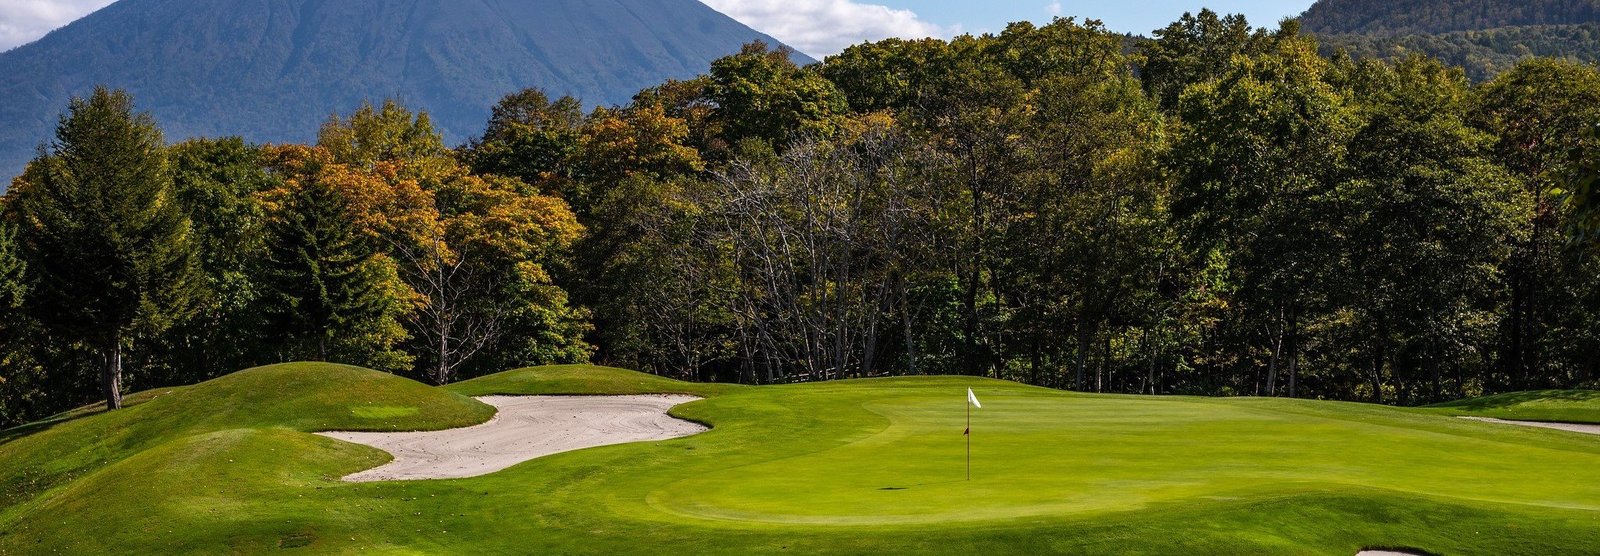 Hanazono Golf Course Information